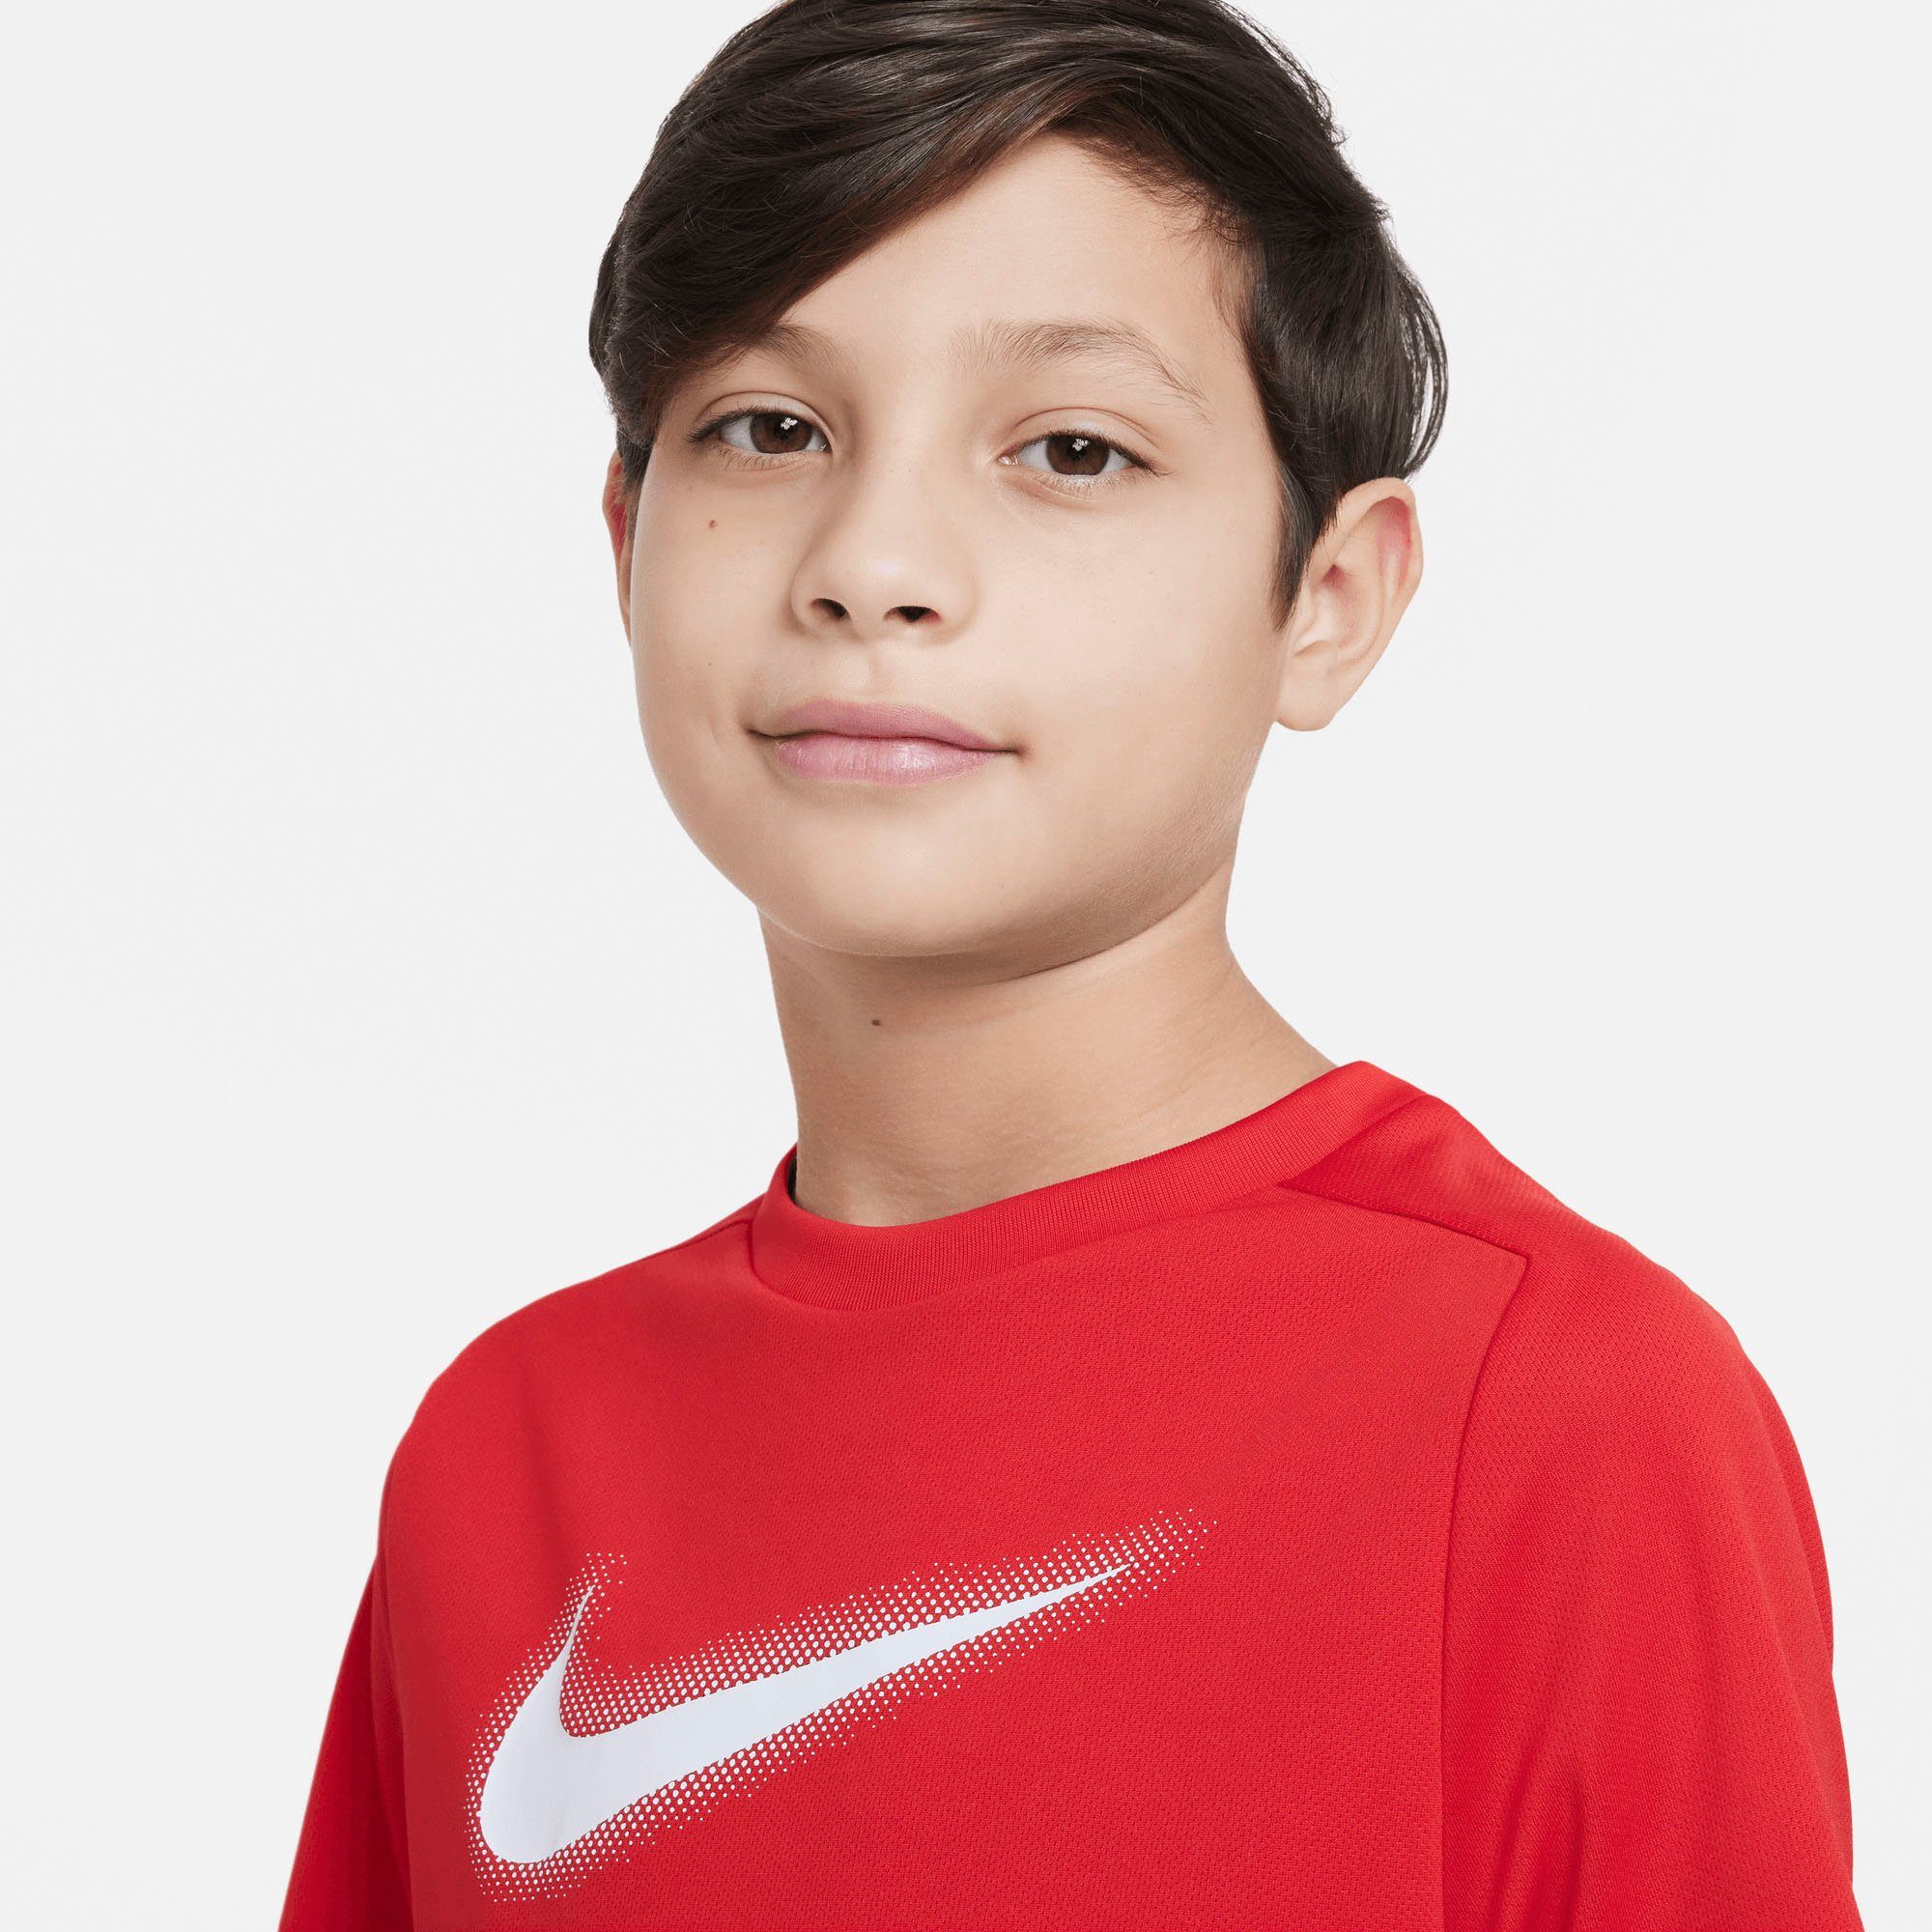 Nike (BOYS) KIDS' TRAINING rot DRI-FIT GRAPHIC Trainingsshirt TOP BIG MULTI+